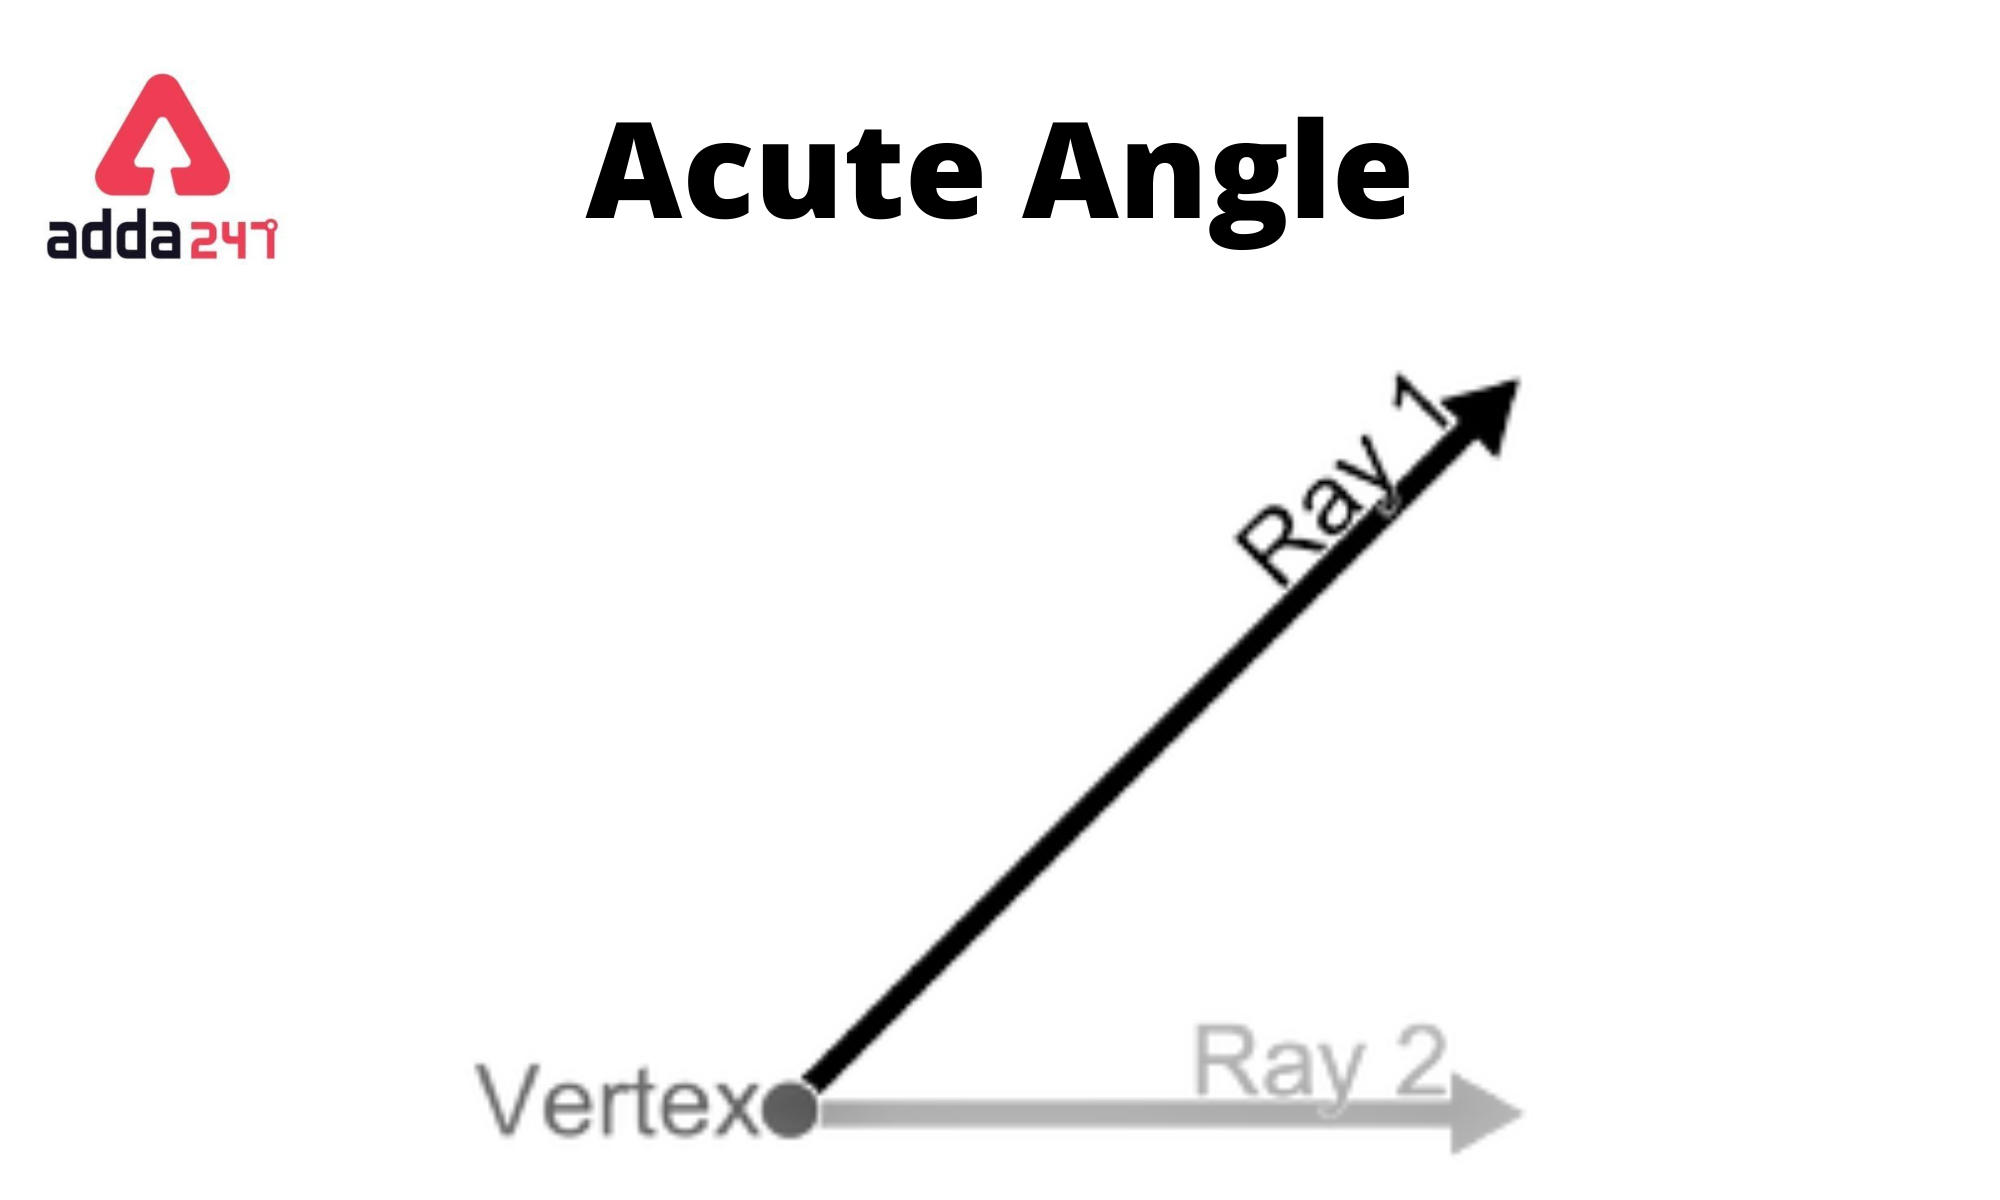 Acute angle - Simple English Wikipedia, the free encyclopedia